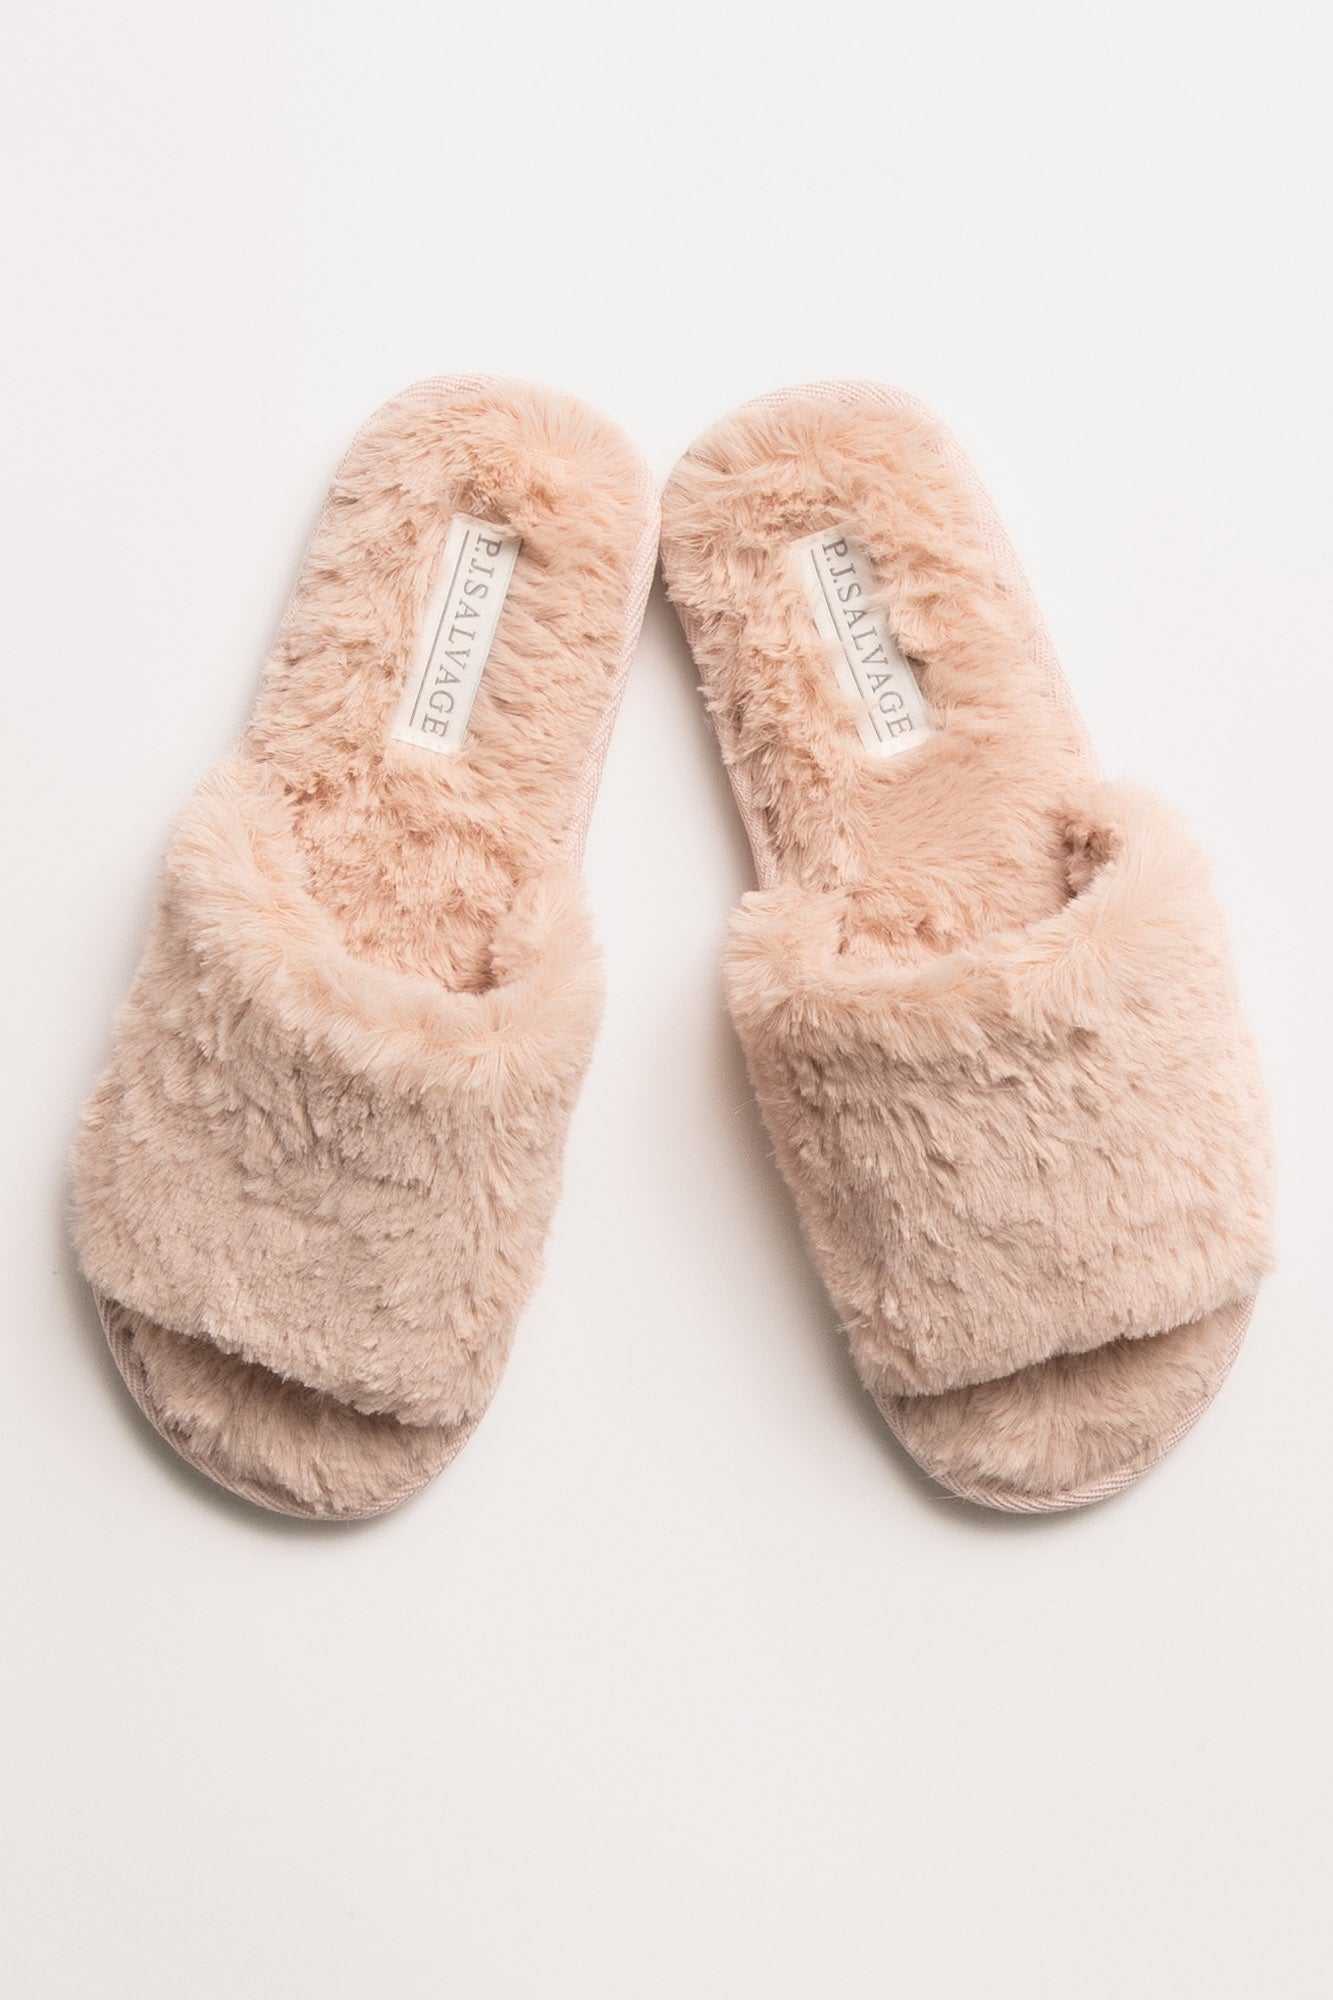 Buy CASSIEY Comfortable Indoor/Outdoor Soft Bottom Fur Slippers |Womens  Bunny Designed Slippers |Girls Slippers flip Flop- Orange at Amazon.in